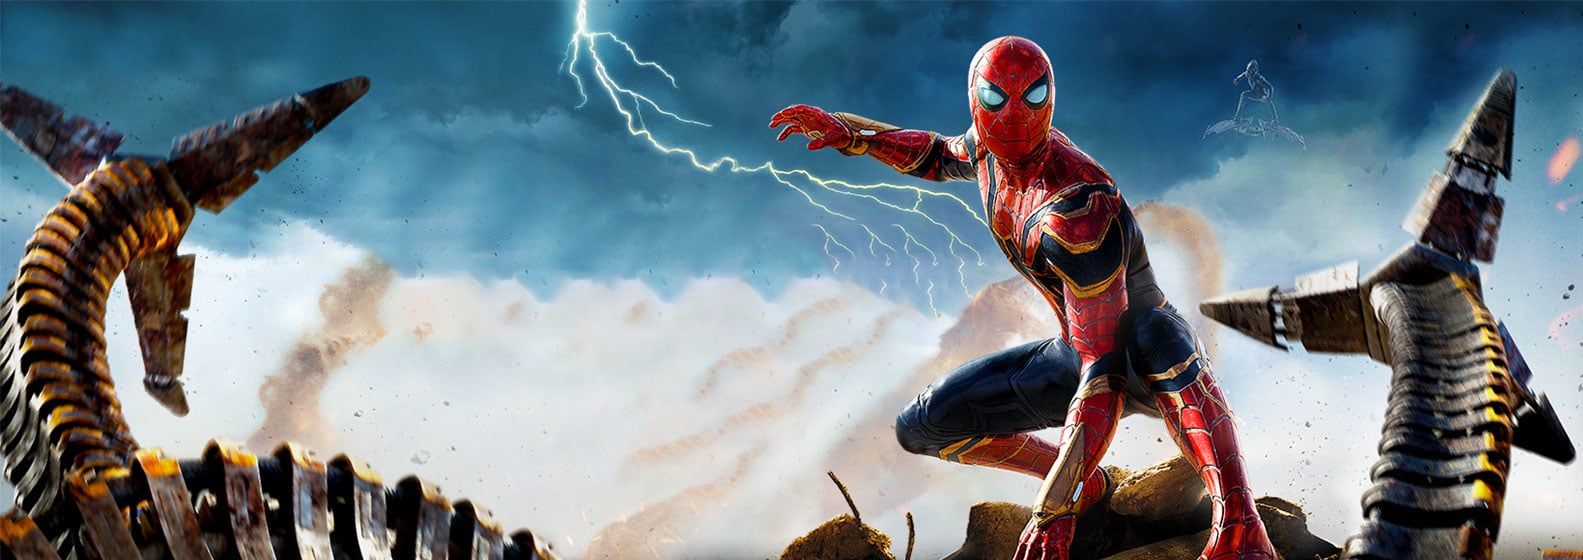 Spider-Man: No Way Home - Header Image